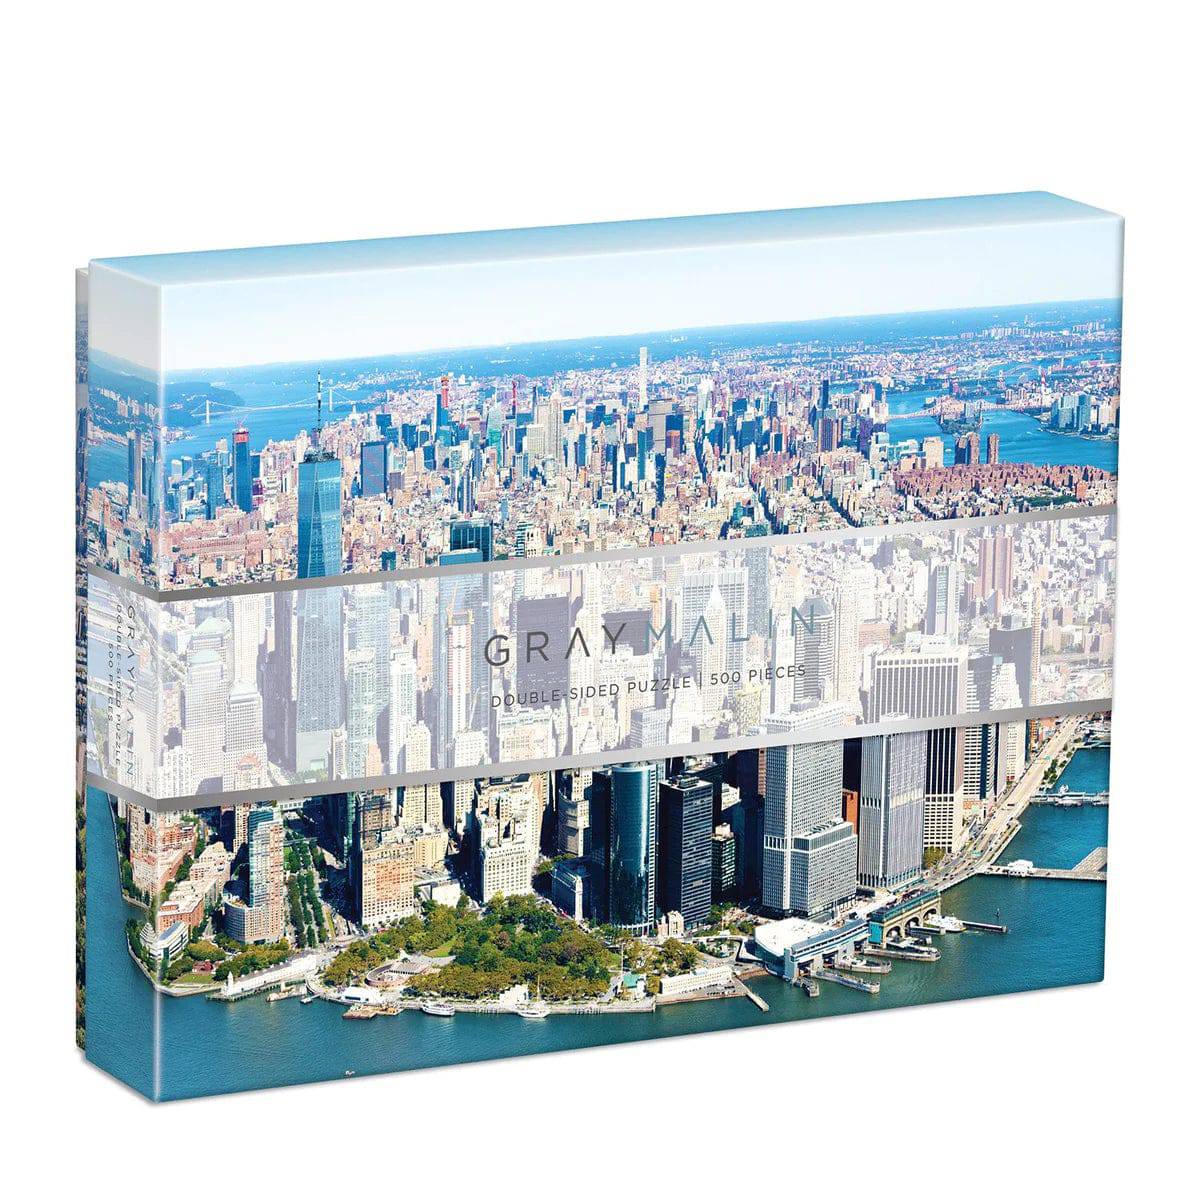 Gray Malin New York City Double-Sided 500 Piece Jigsaw Puzzle - The Preppy Bunny